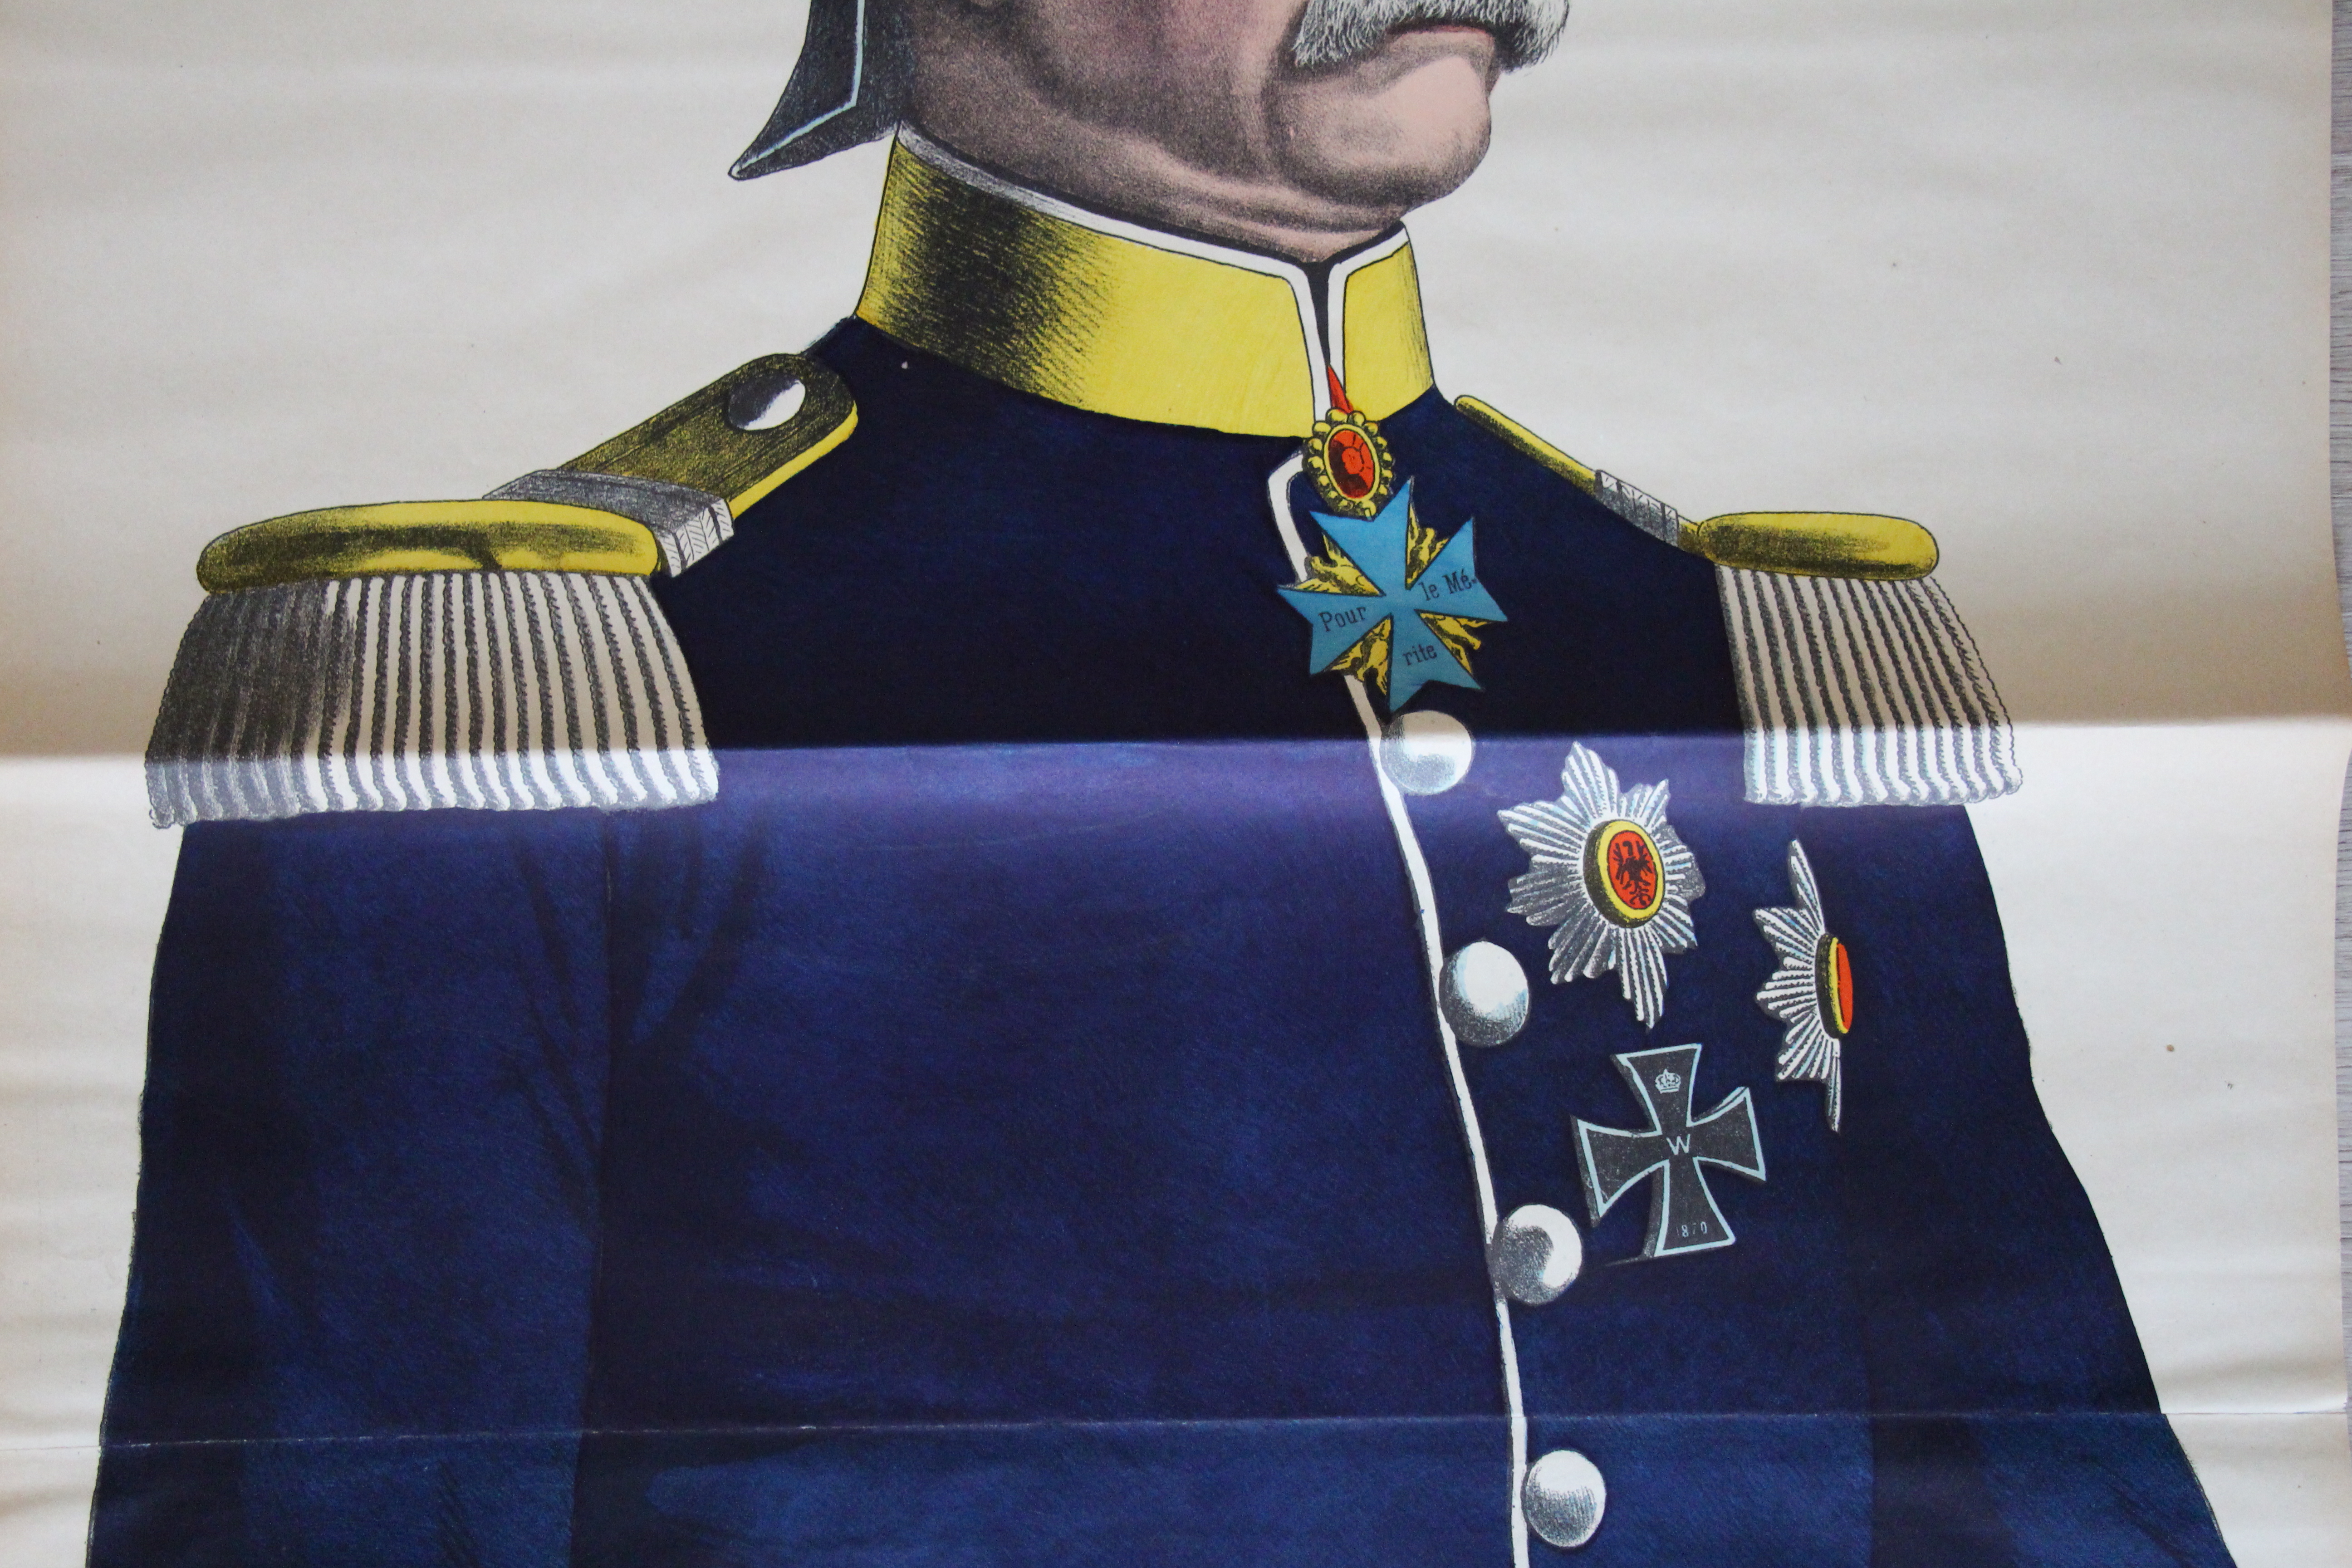 Grande planche dépliante Wissembourg Bismarck - Otto von Bismarck - 1898 - Chancelier impérial d'Allemagne